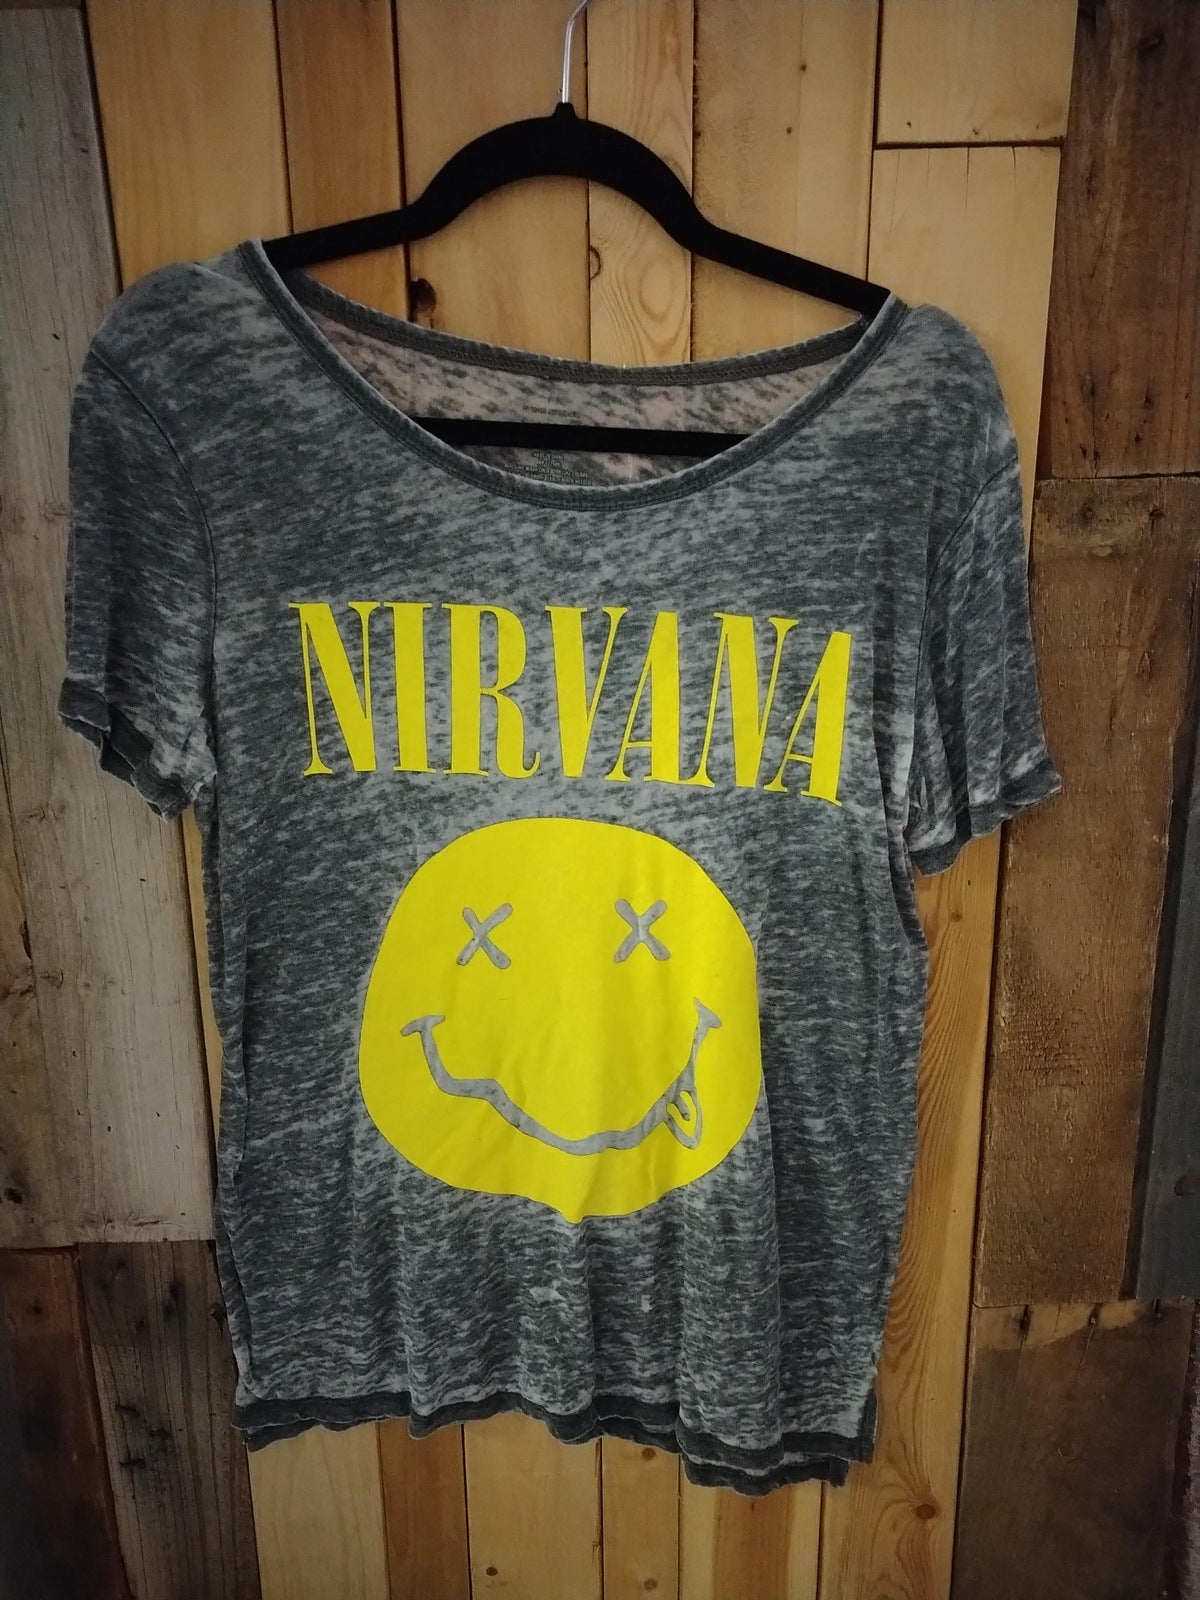 Nirvana Semi Sheer Women's Shirt Size Medium